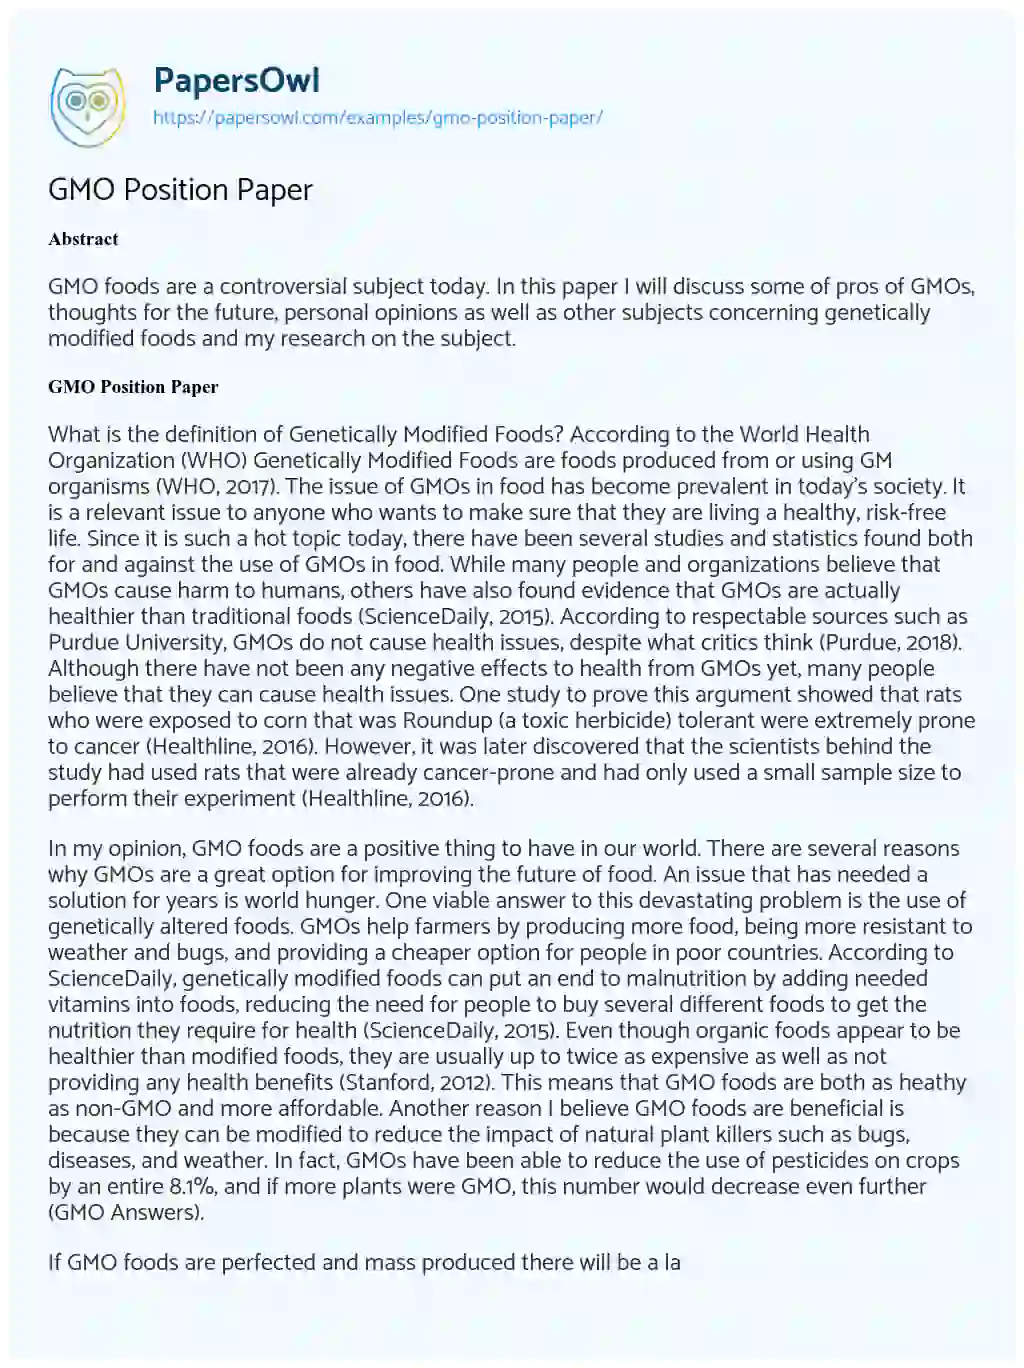 Essay on GMO Position Paper